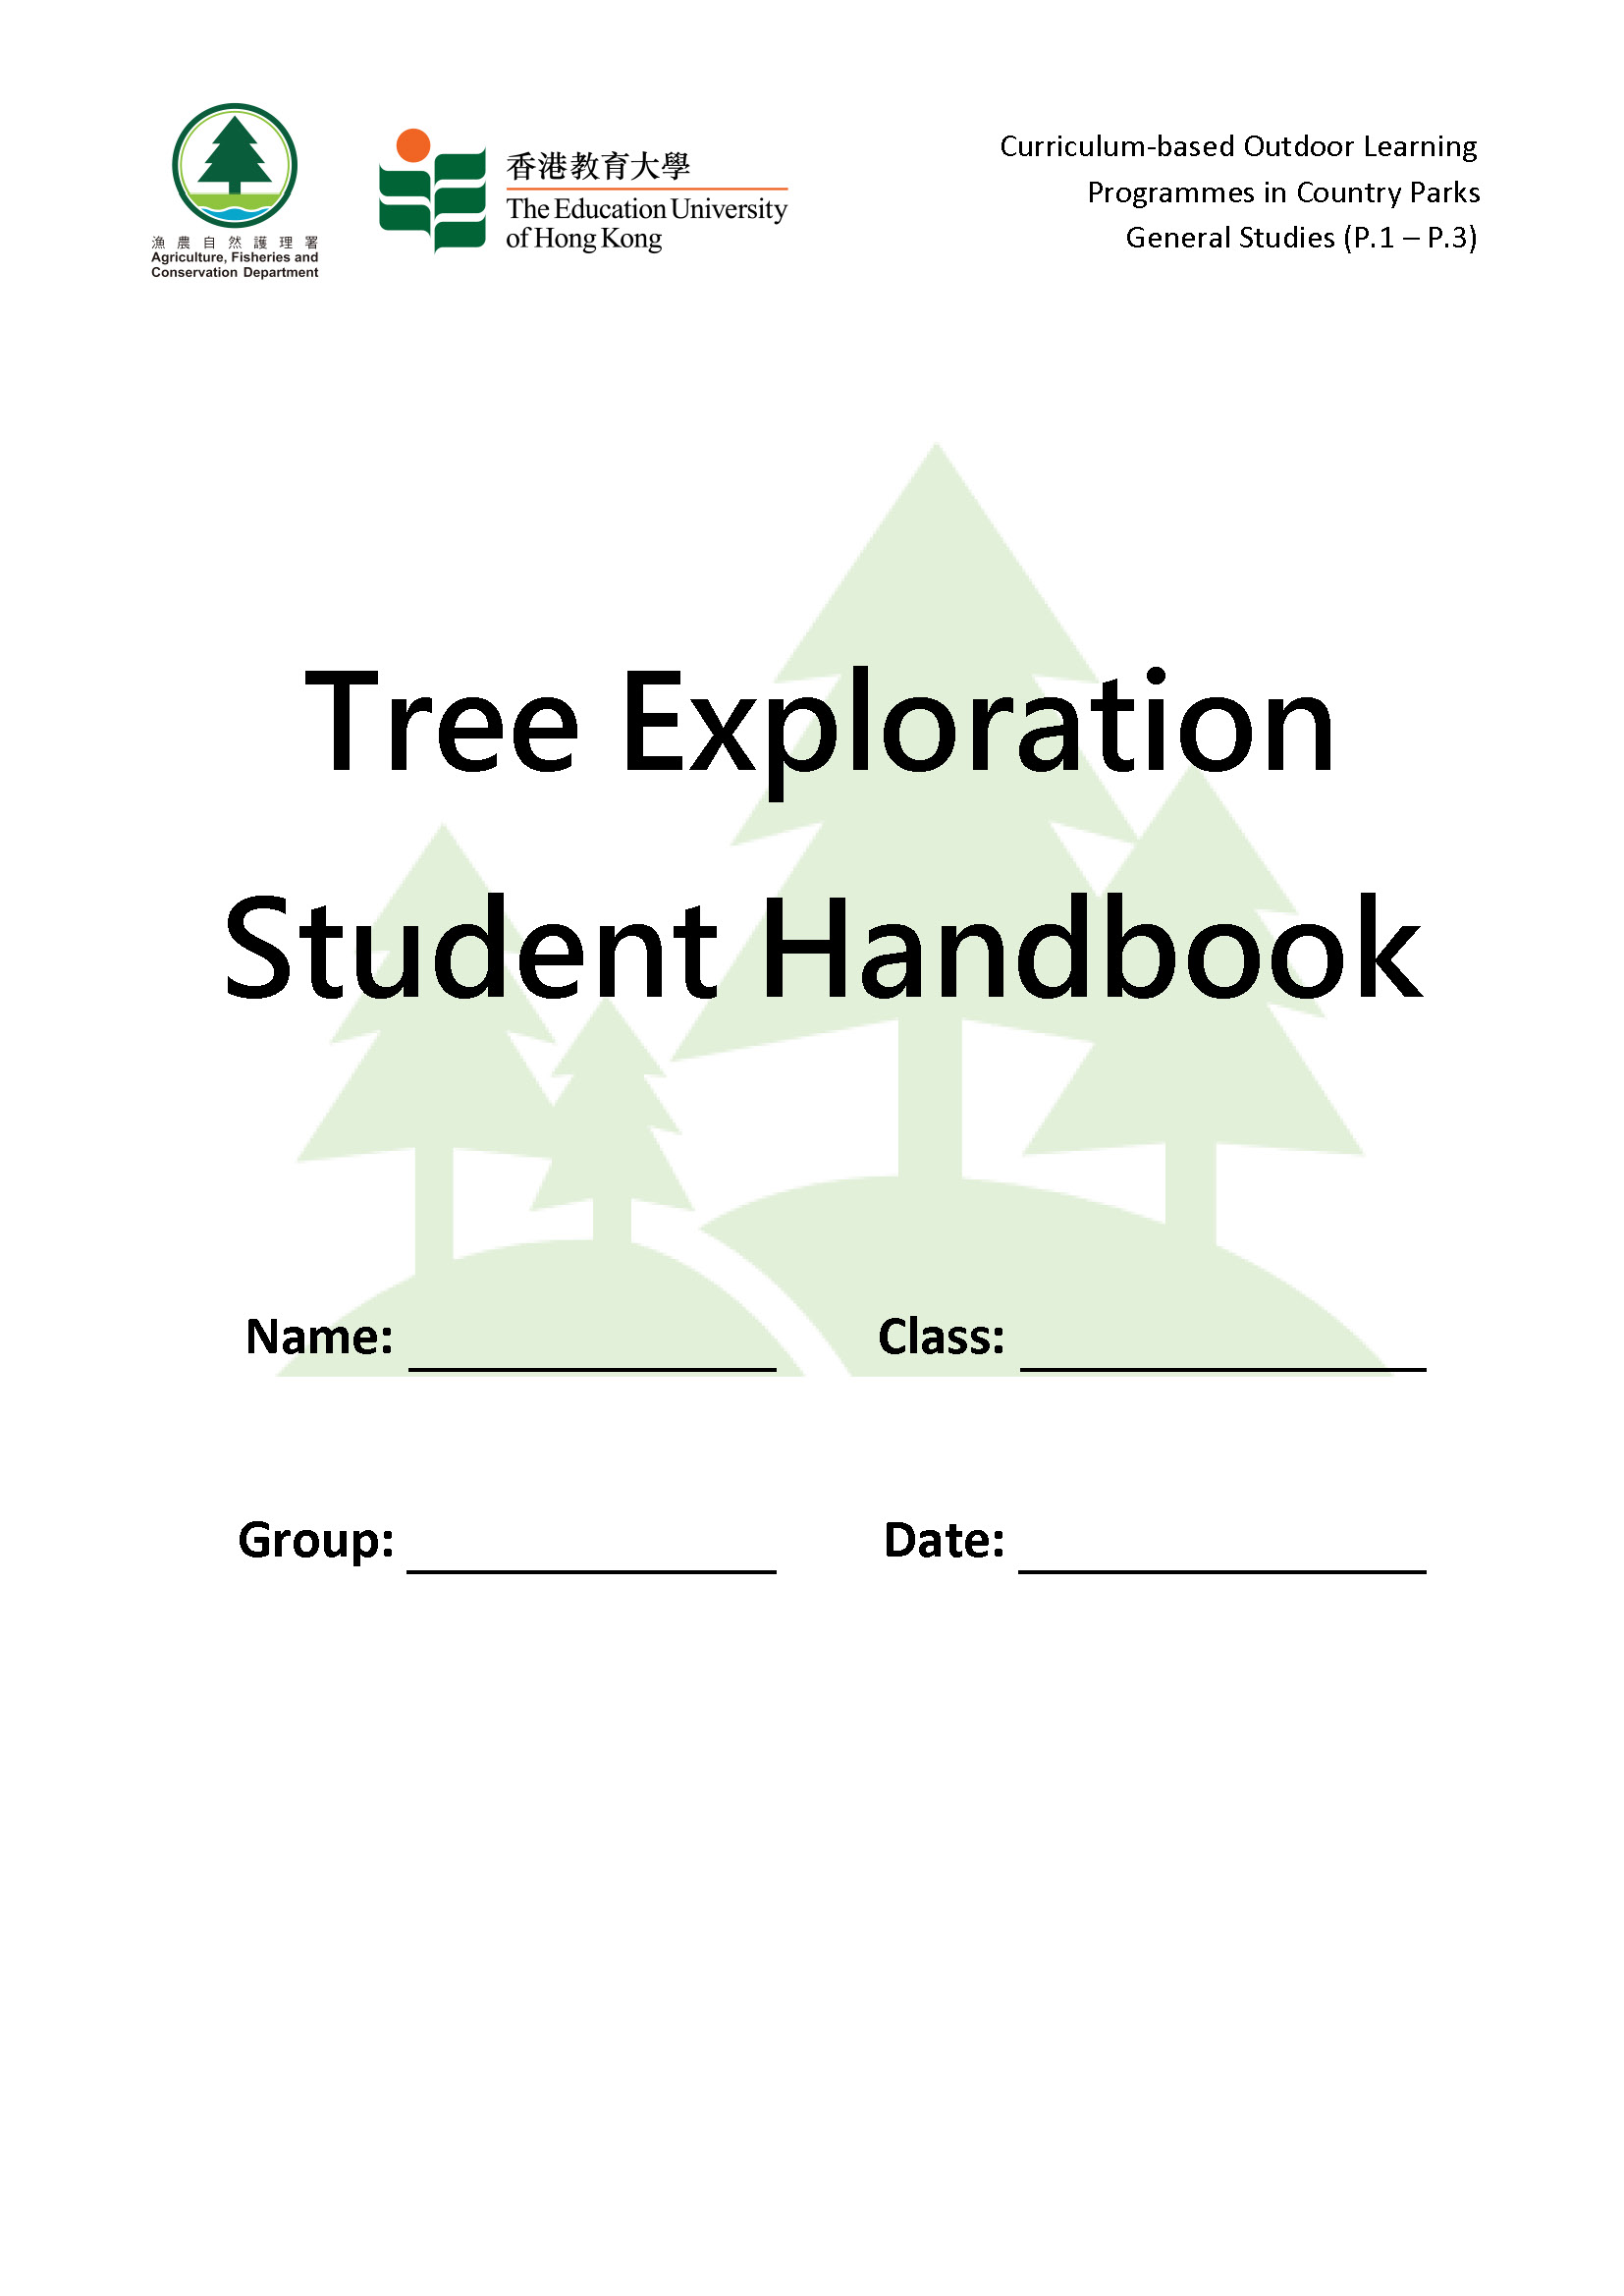 Download Handbook of Tree Exploration (Student)